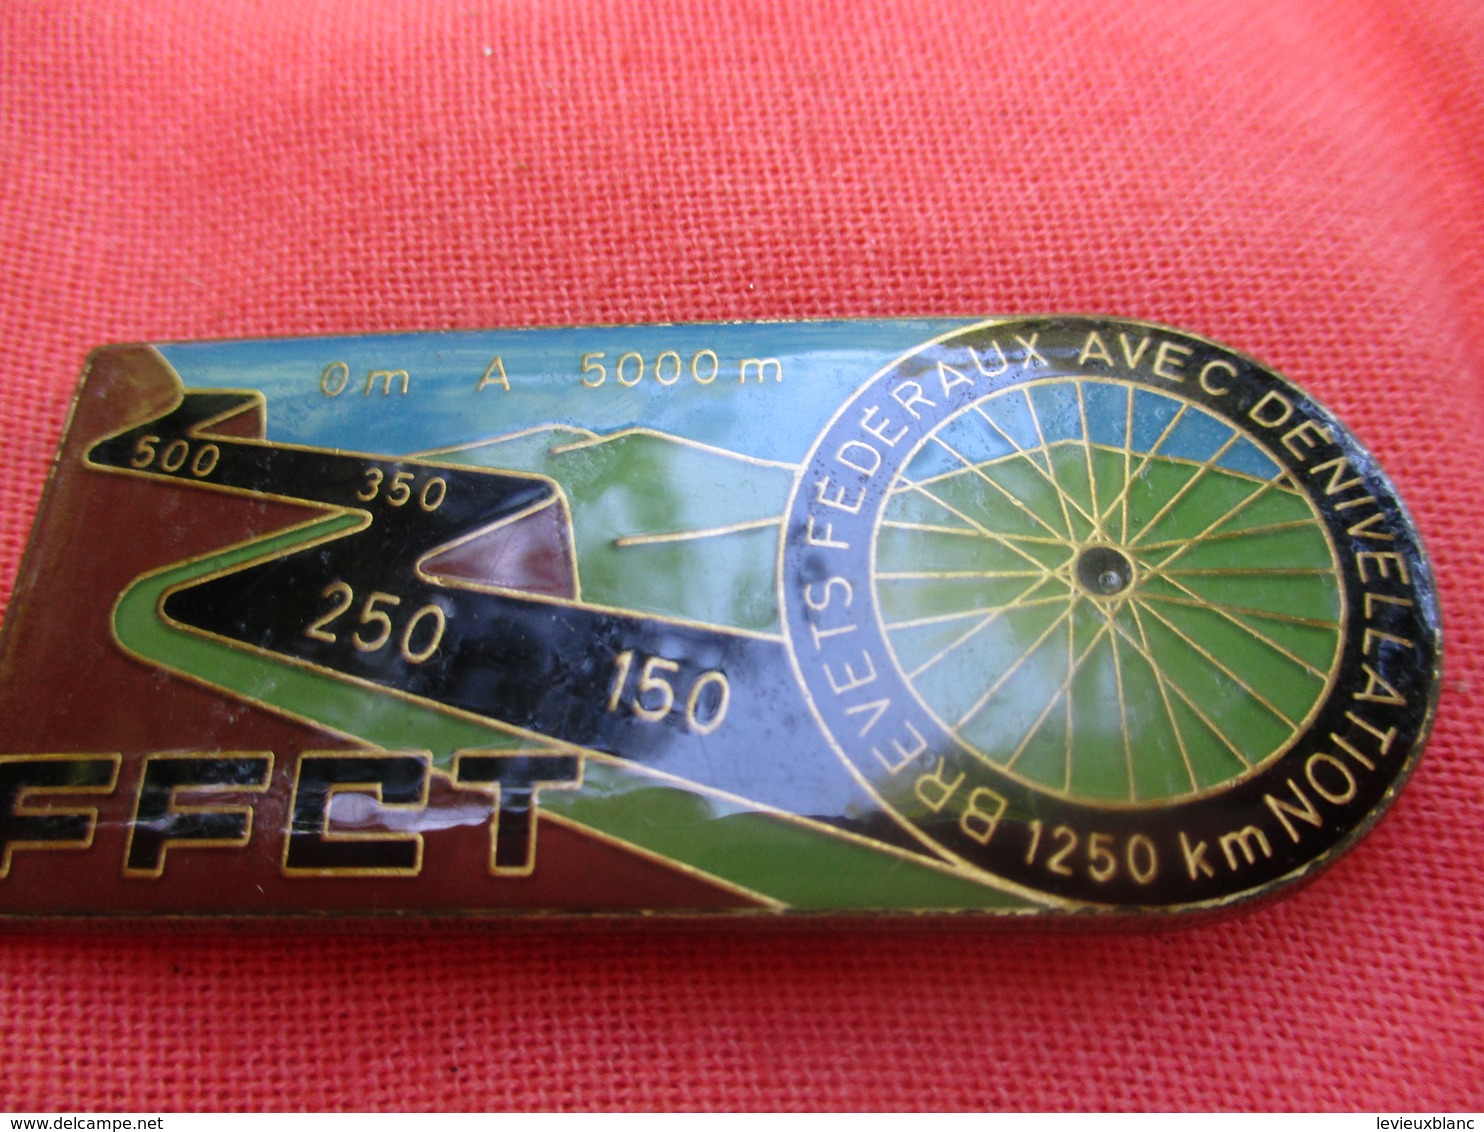 Médaille De Sport/Cyclisme/Brevets Federaux Avec Dénivellation/1250 Km /Beraudy 63 AMBERT/vers 1980-90      SPO298 - Ciclismo